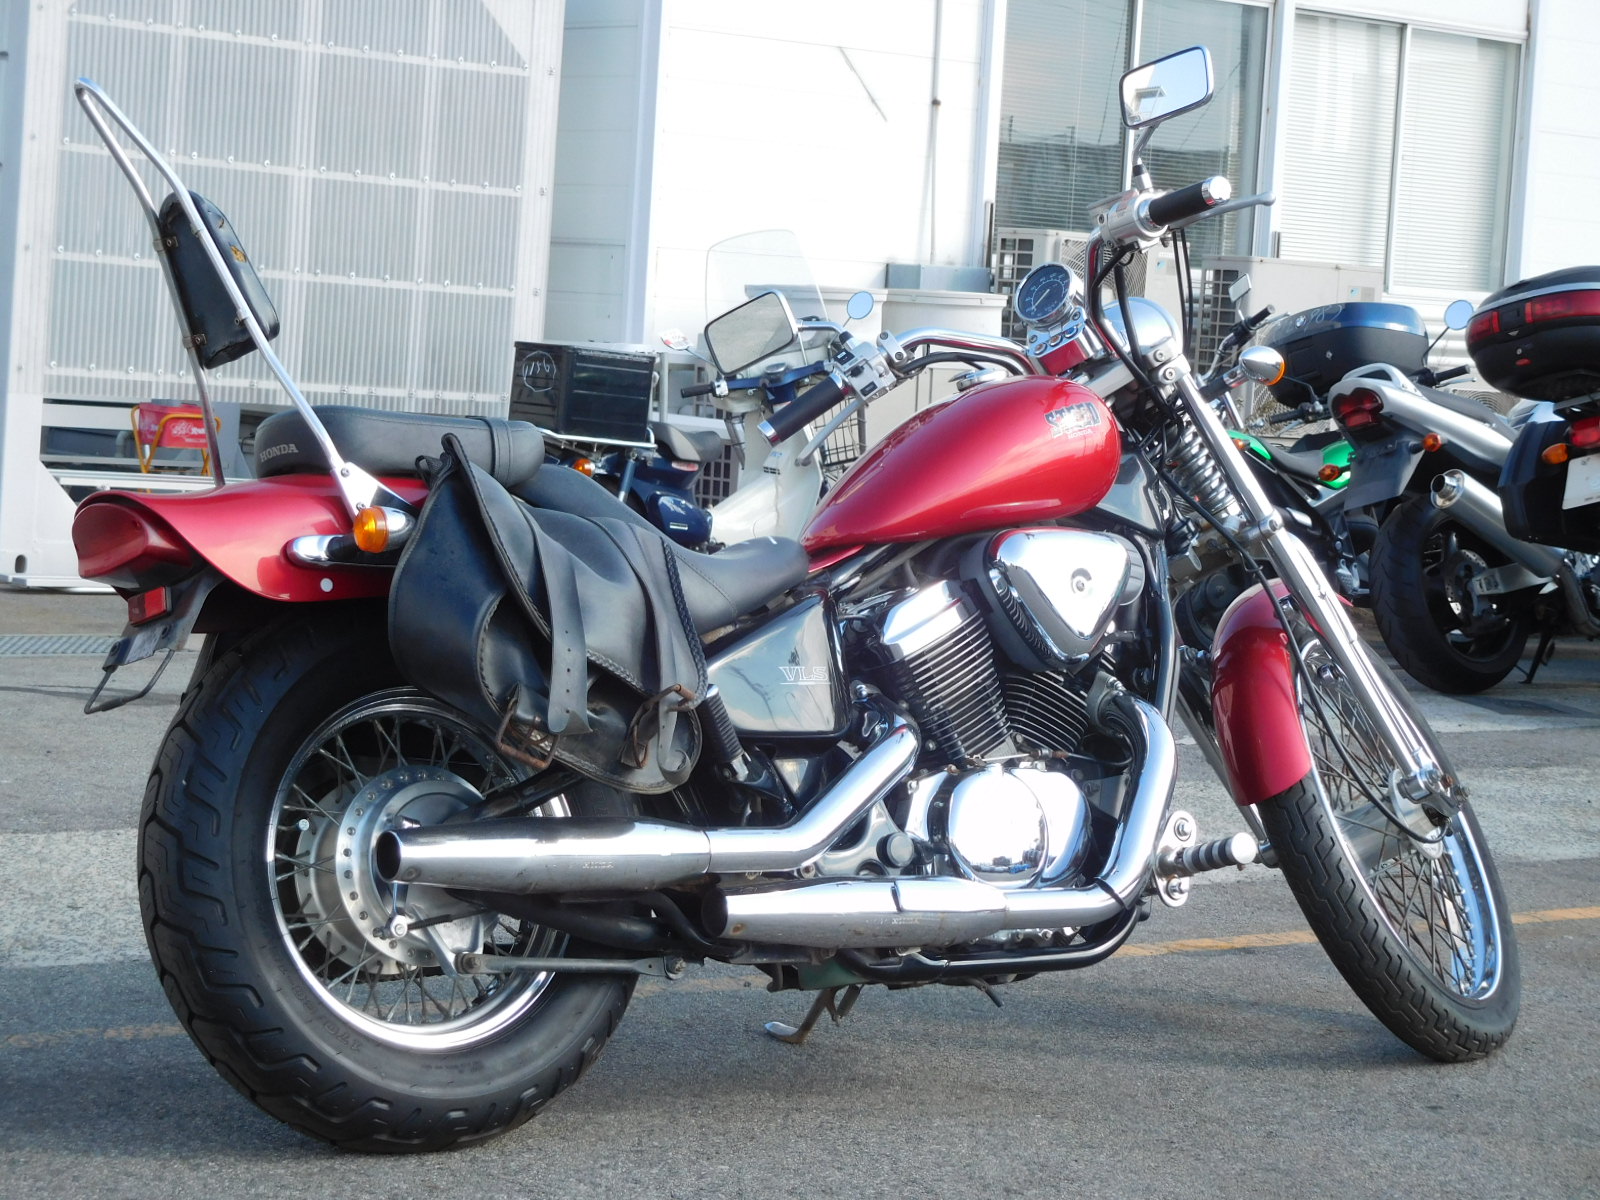 Мотоцикл honda steed (хонда стид) 400 — обзор и технические характеристики модели